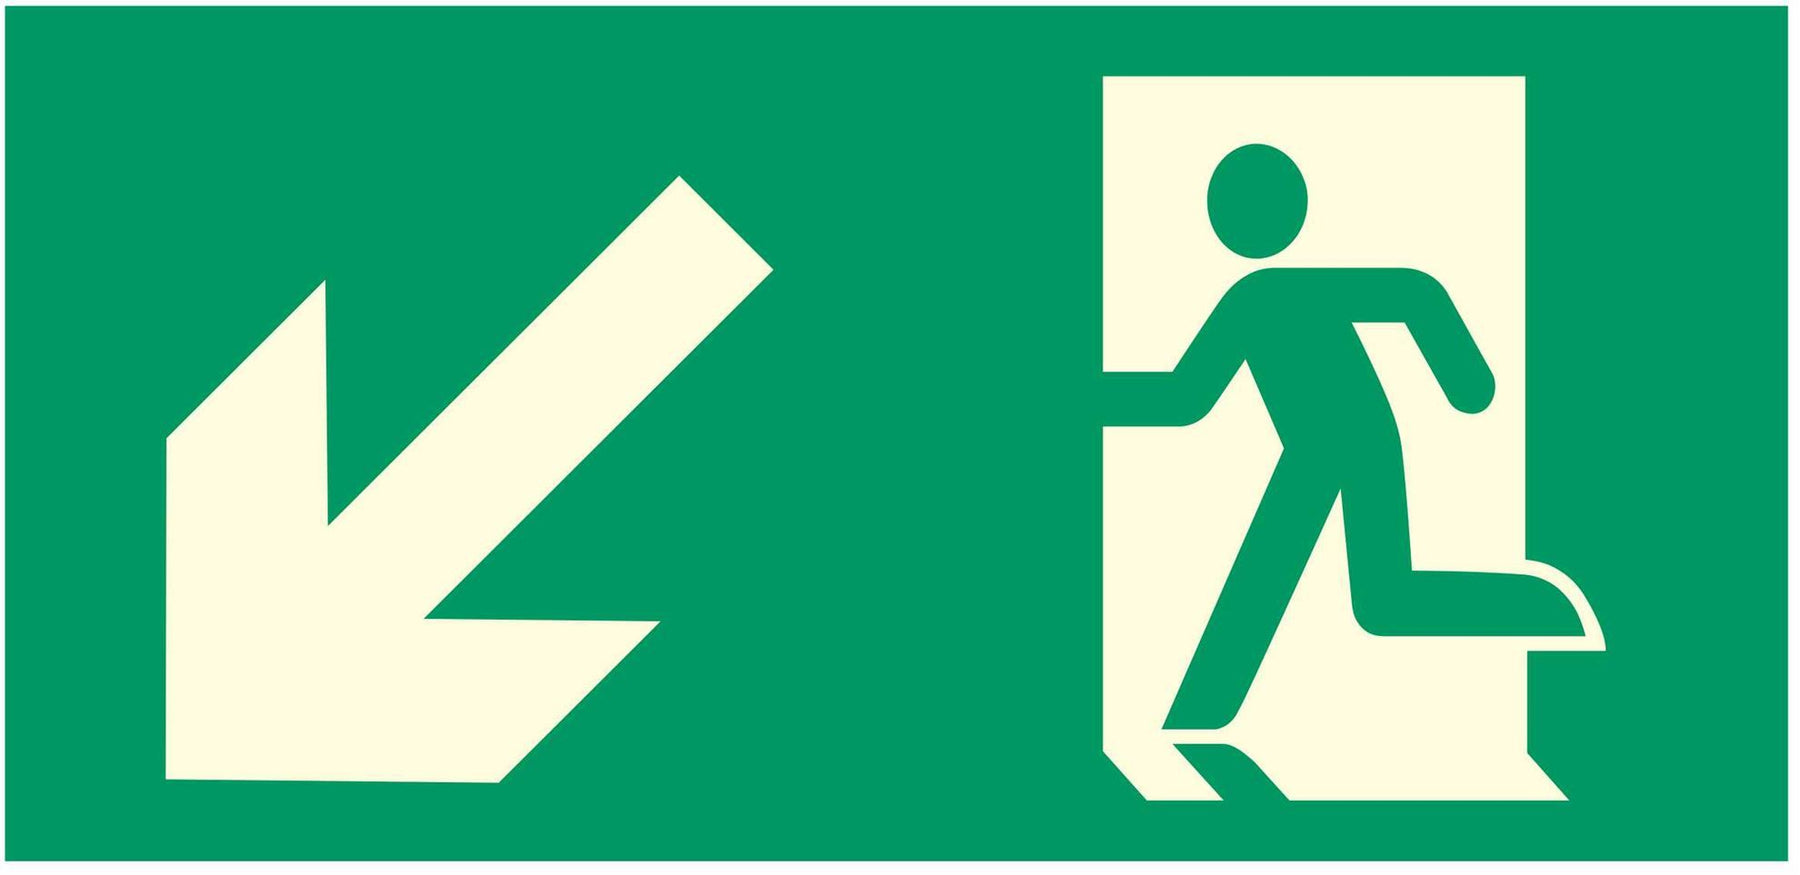 Emergency Escape - Running Man Left - Down Left Arrow